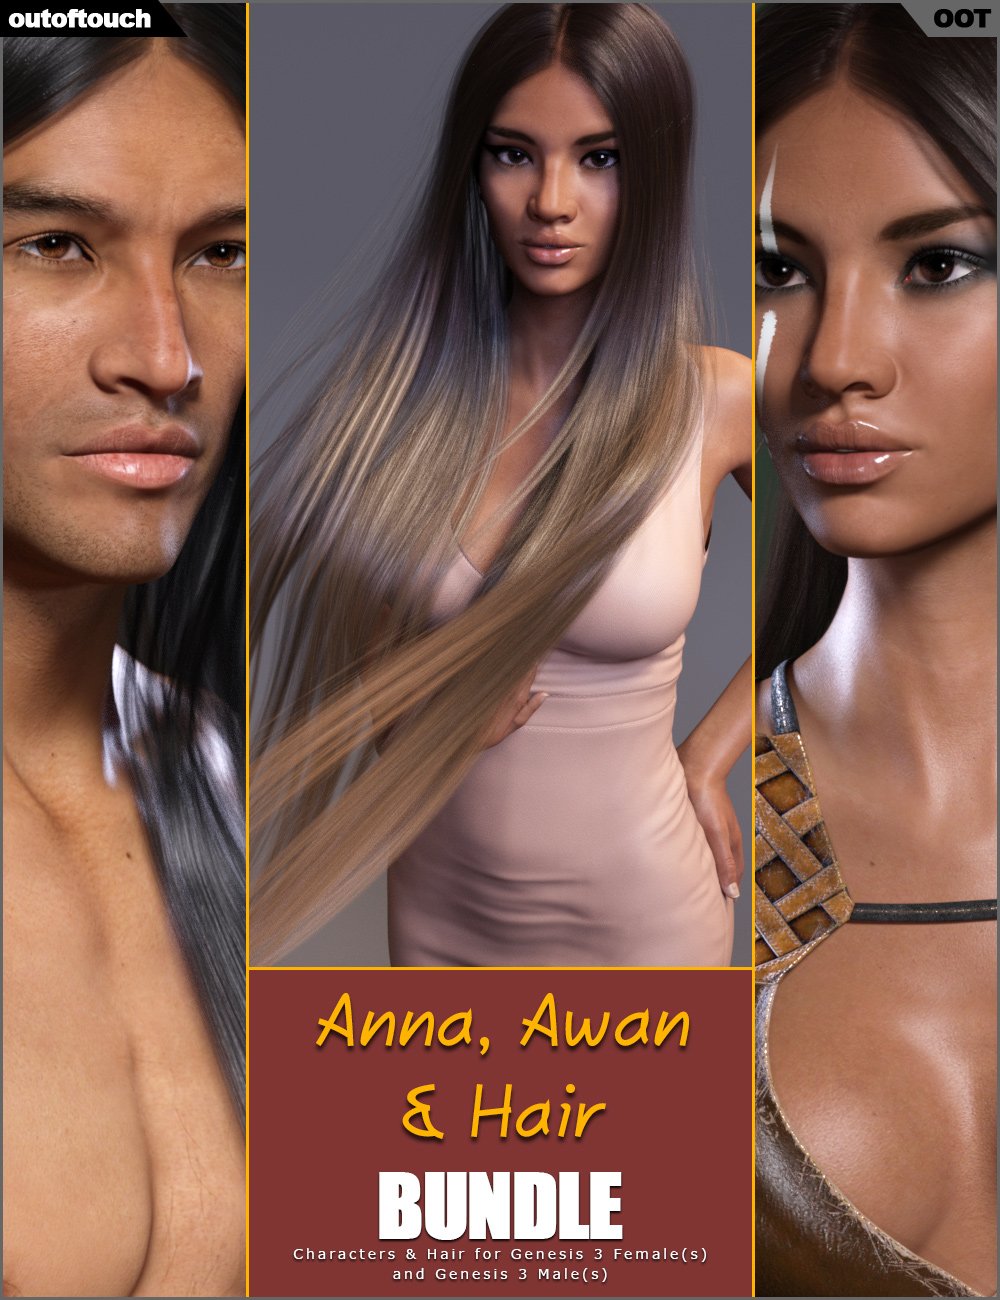 Anna HD and Awan HD plus Sleeky Hair Bundle by: outoftouchRaiya, 3D Models by Daz 3D